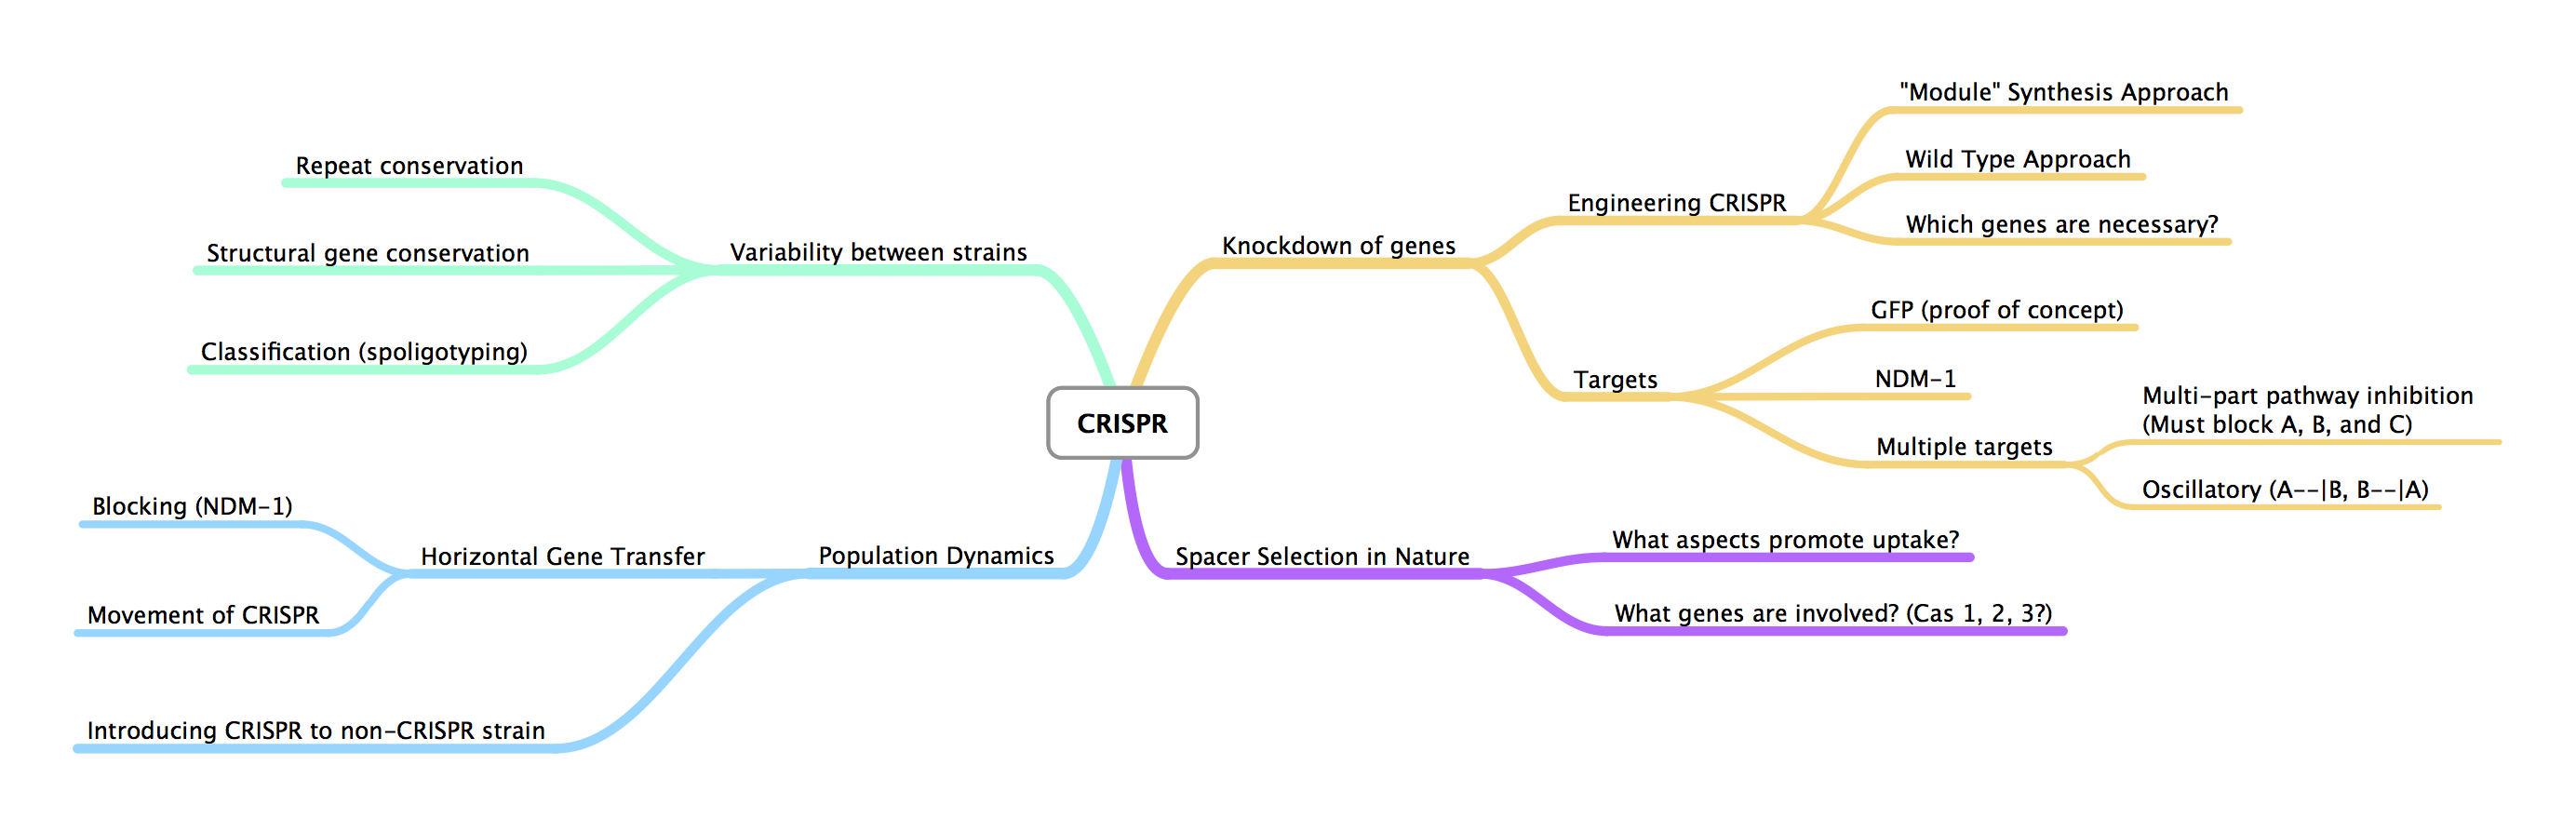 ASU CRISPR Mindnode.pdf